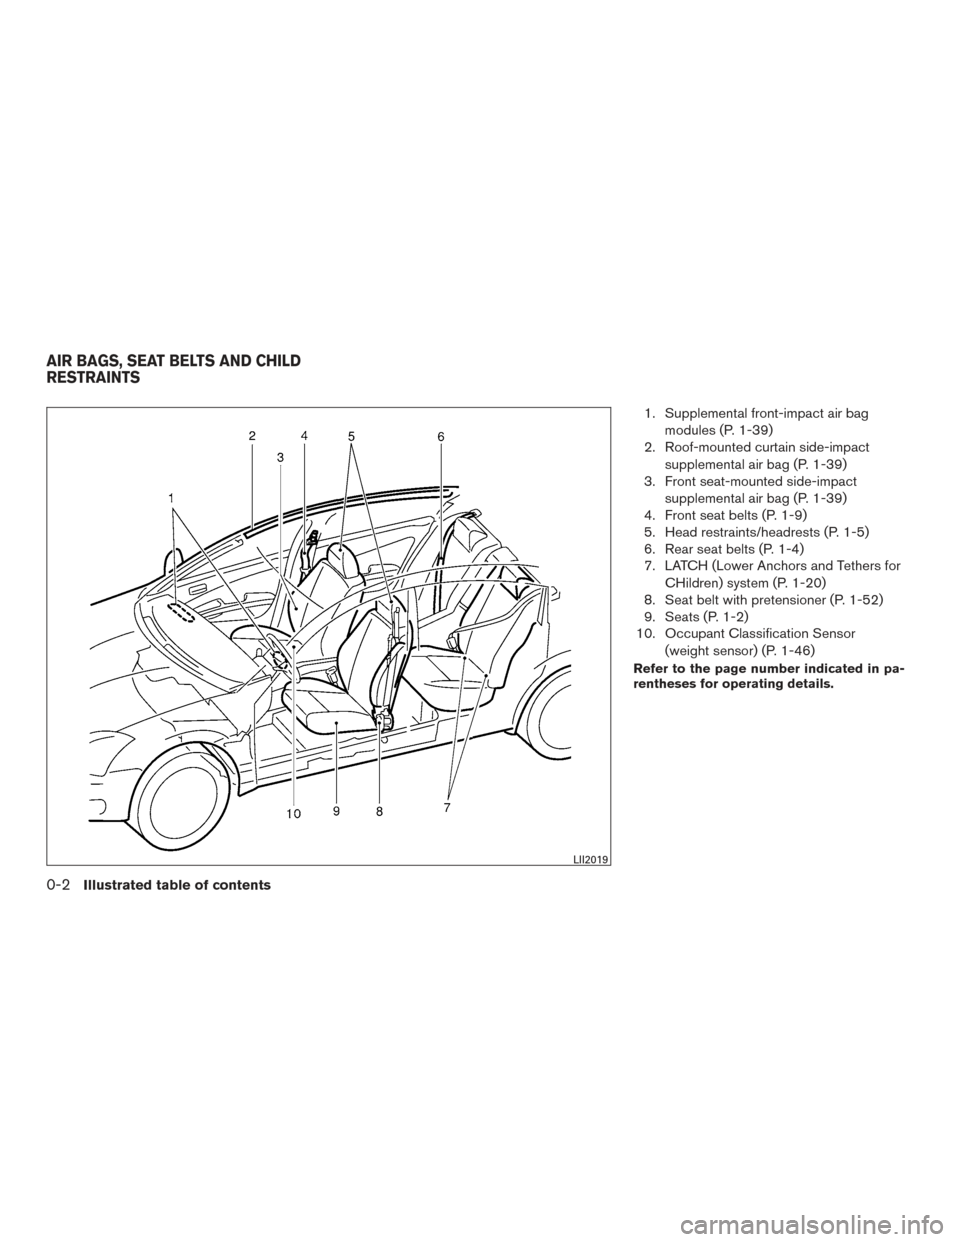 NISSAN VERSA SEDAN 2015 2.G Owners Manual 1. Supplemental front-impact air bagmodules (P. 1-39)
2. Roof-mounted curtain side-impact
supplemental air bag (P. 1-39)
3. Front seat-mounted side-impact
supplemental air bag (P. 1-39)
4. Front seat 